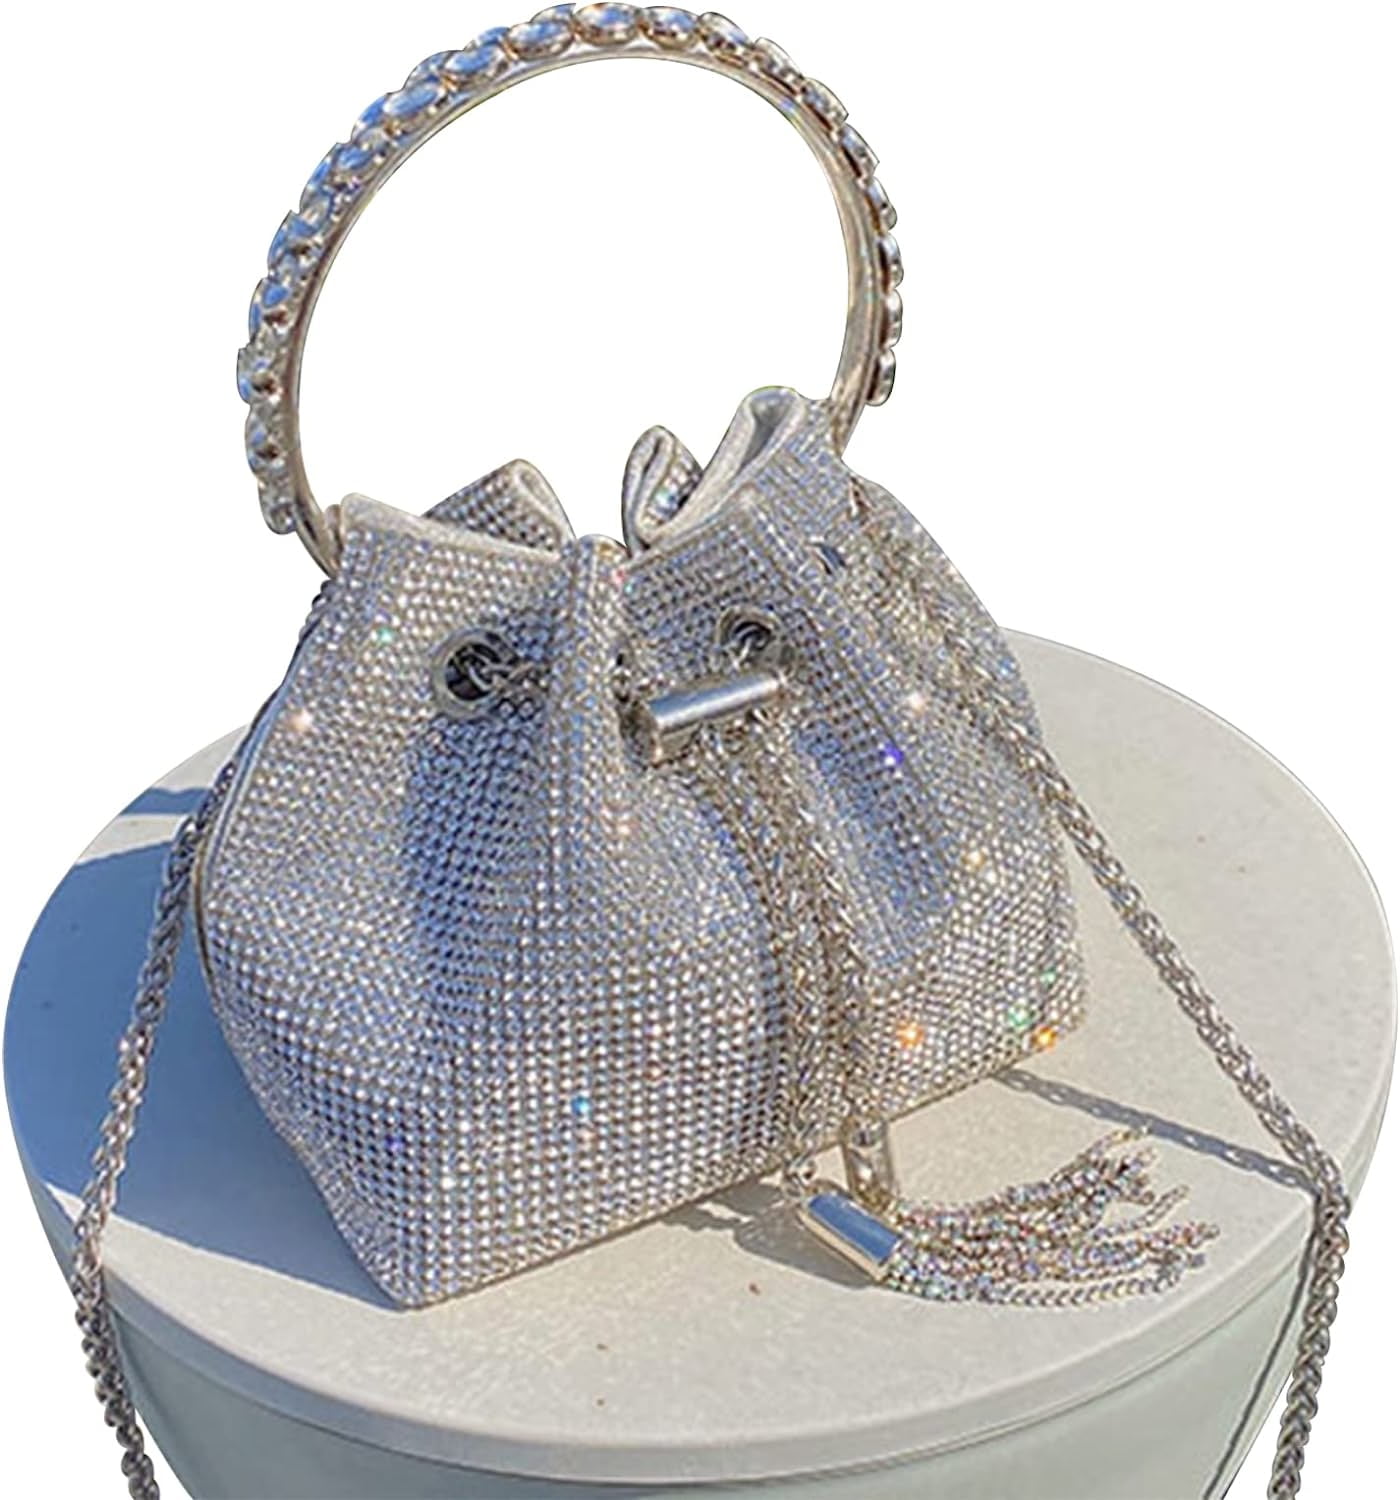 topfive Sparkly Gold Rhinestones Clutch Purse for Women Wedding Prom Party  Handbag Evening Formal Bag: Handbags: Amazon.com